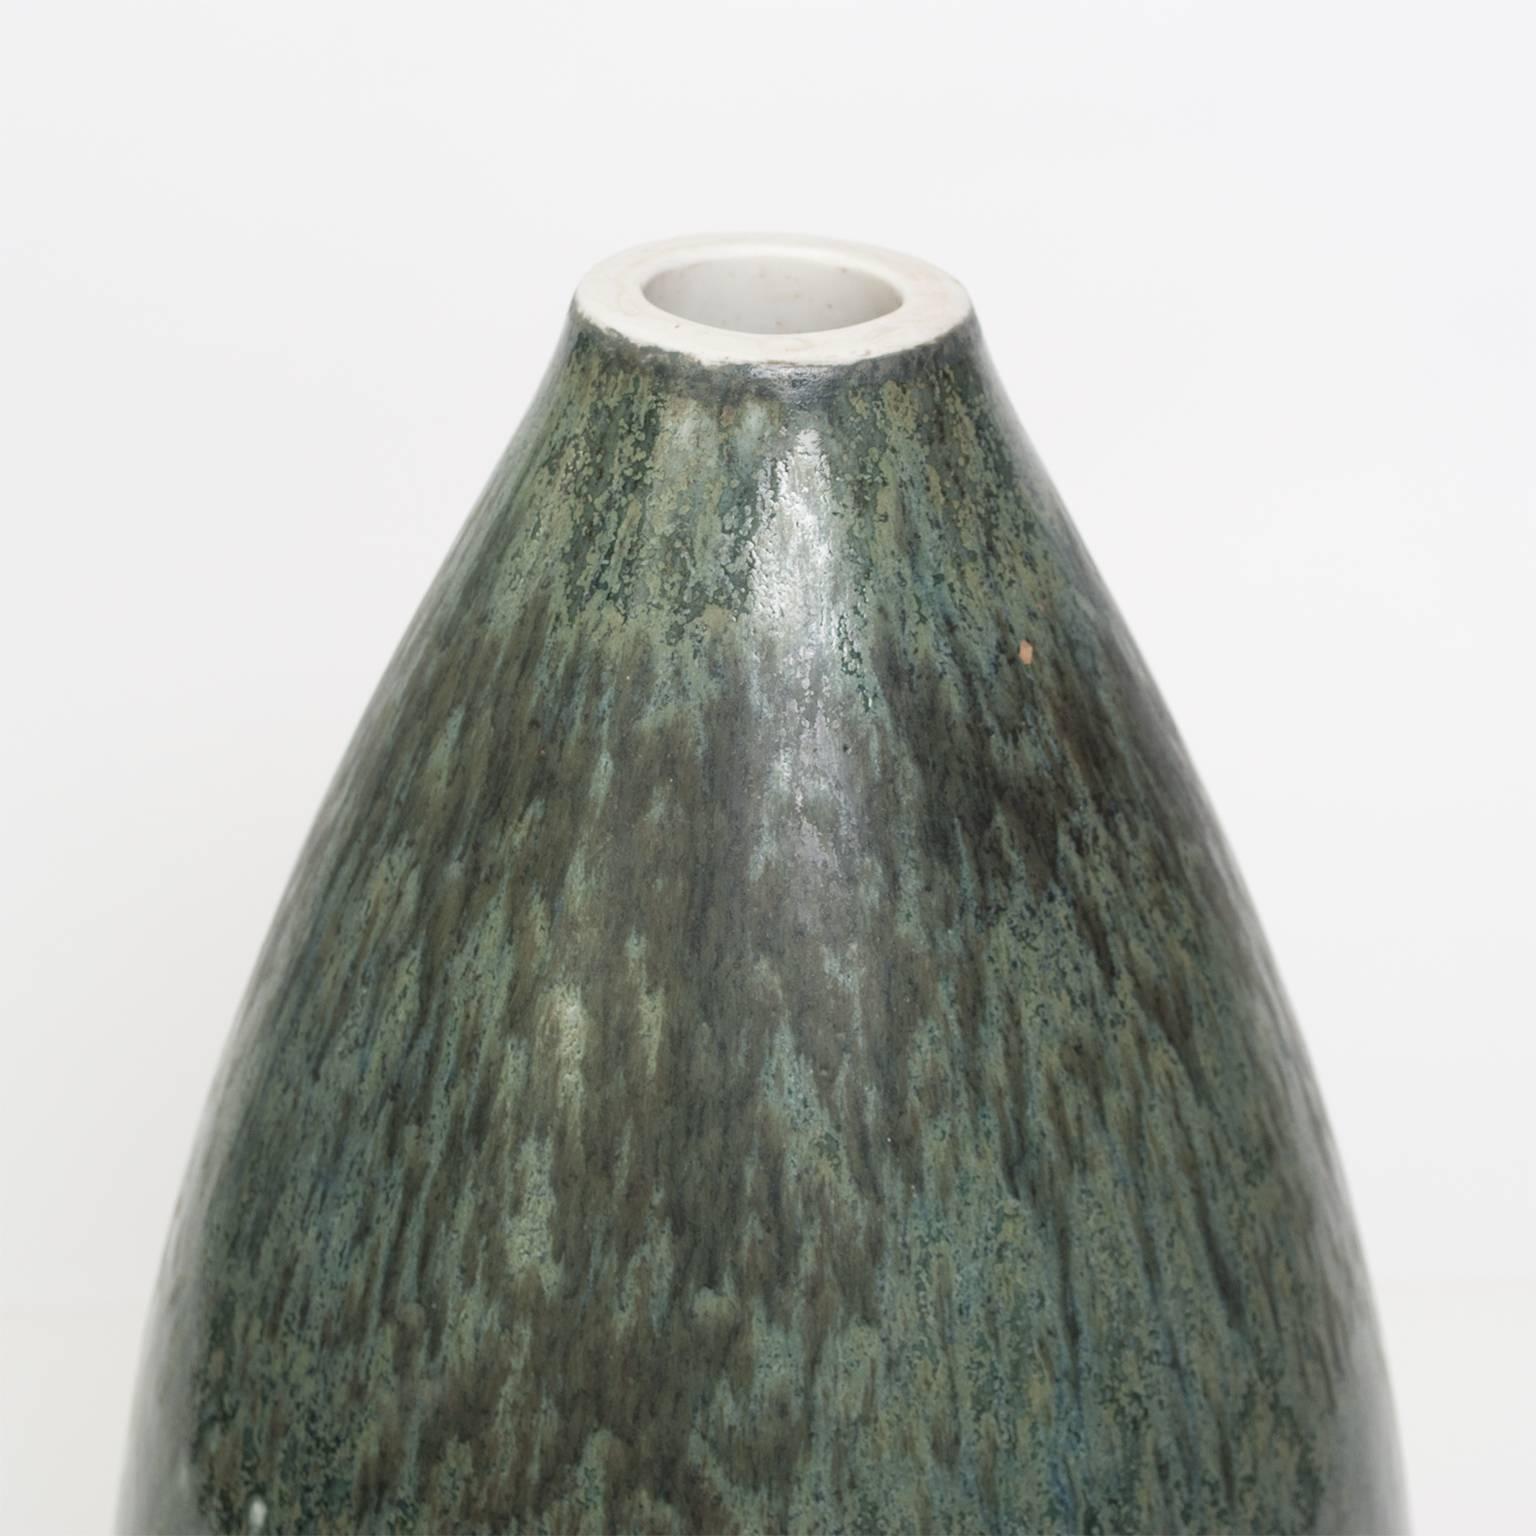 Glazed Large Scandinavian Modern Studio Vase, Gunnar Nylund in a Green glaze